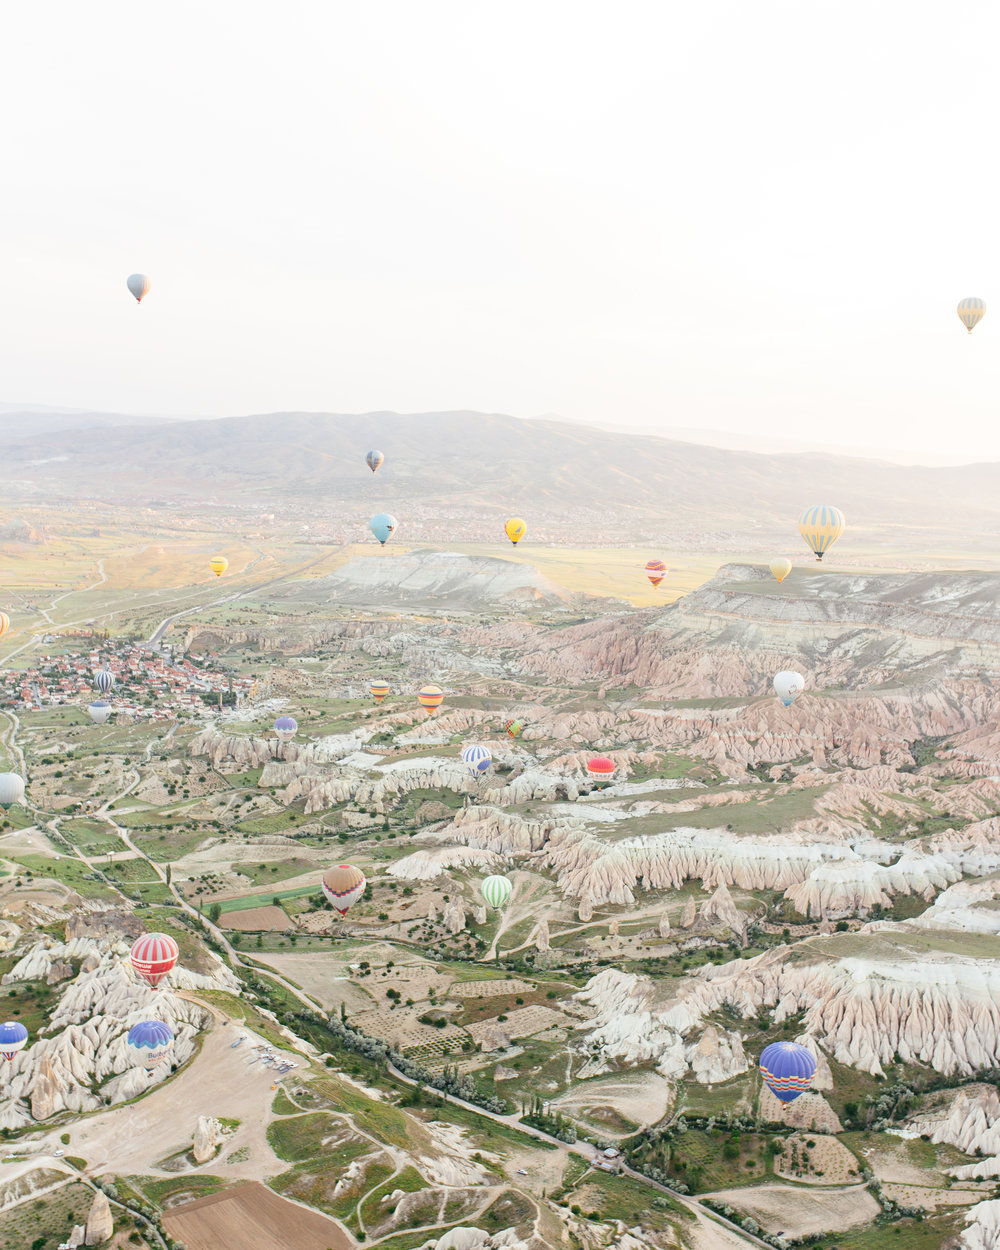 cappadocia turkey hot air balloons